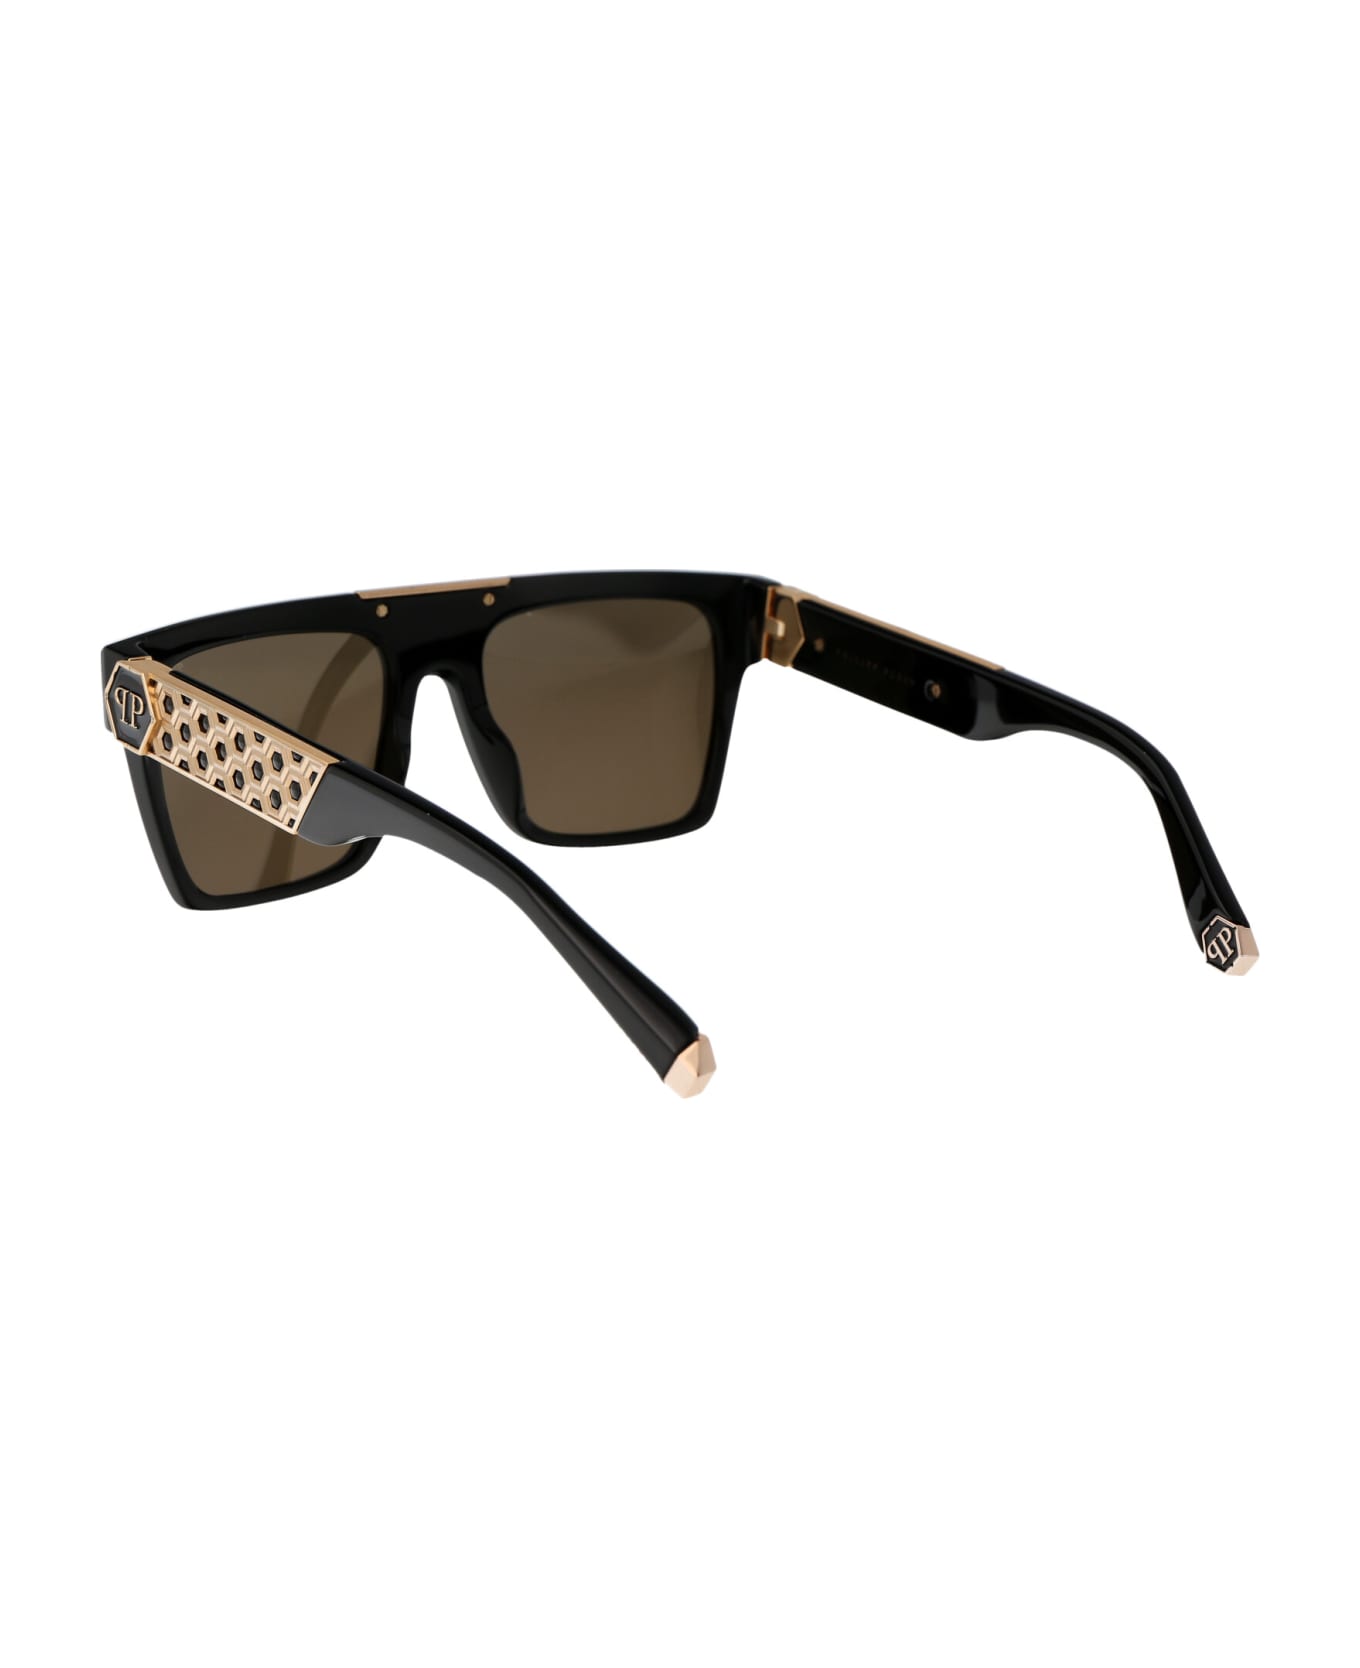 Philipp Plein Spp080 Sunglasses - 700G BLACK